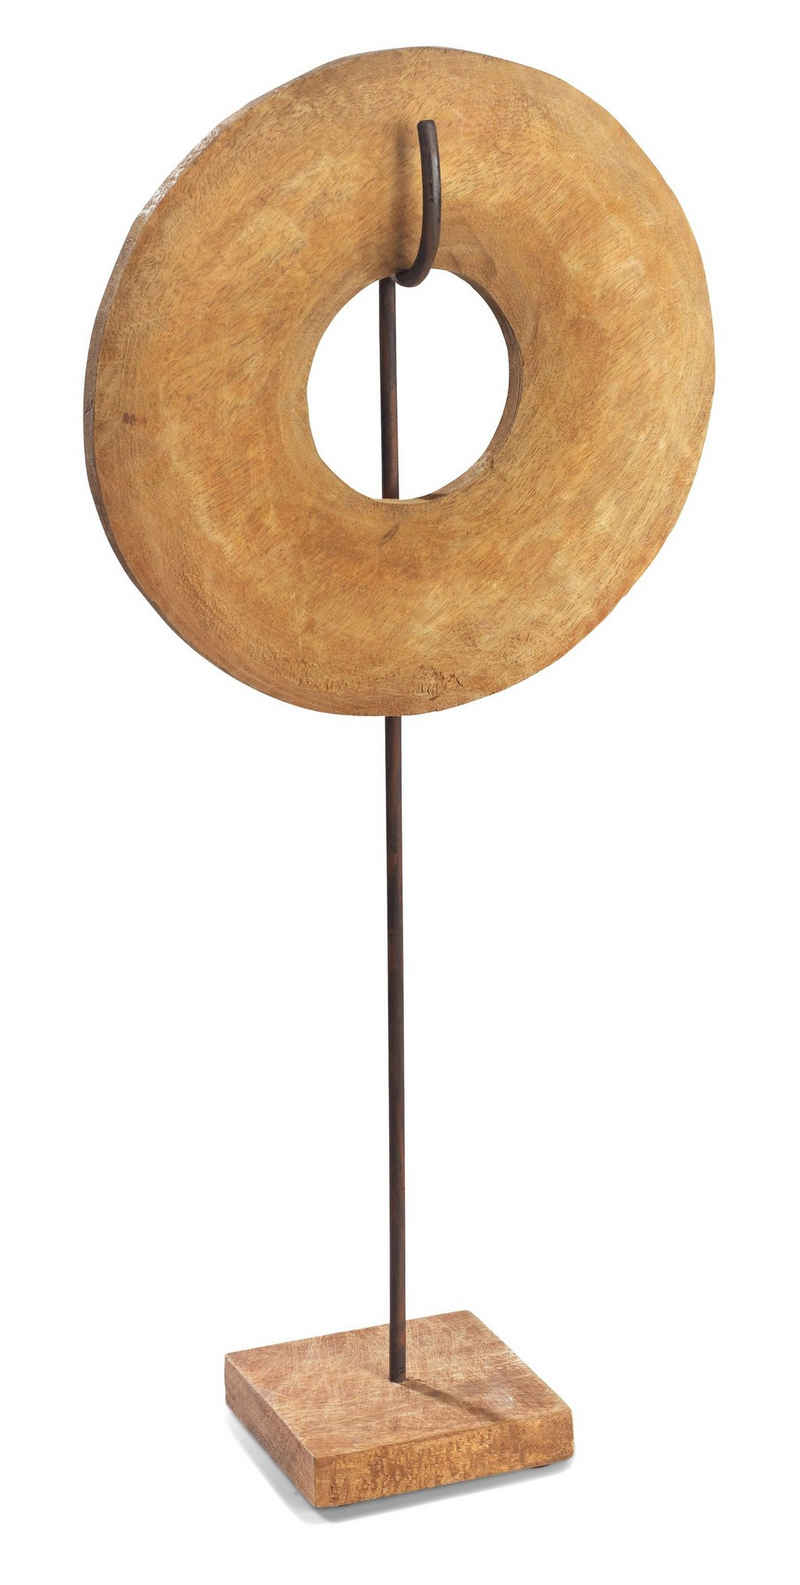 Moritz Skulptur Skulptur Kreis Unendlichkeit Donut groß 65x29x12cm, Dekoobjekt Holz, Tischdeko, Fensterdeko, Wanddeko, Holzdeko